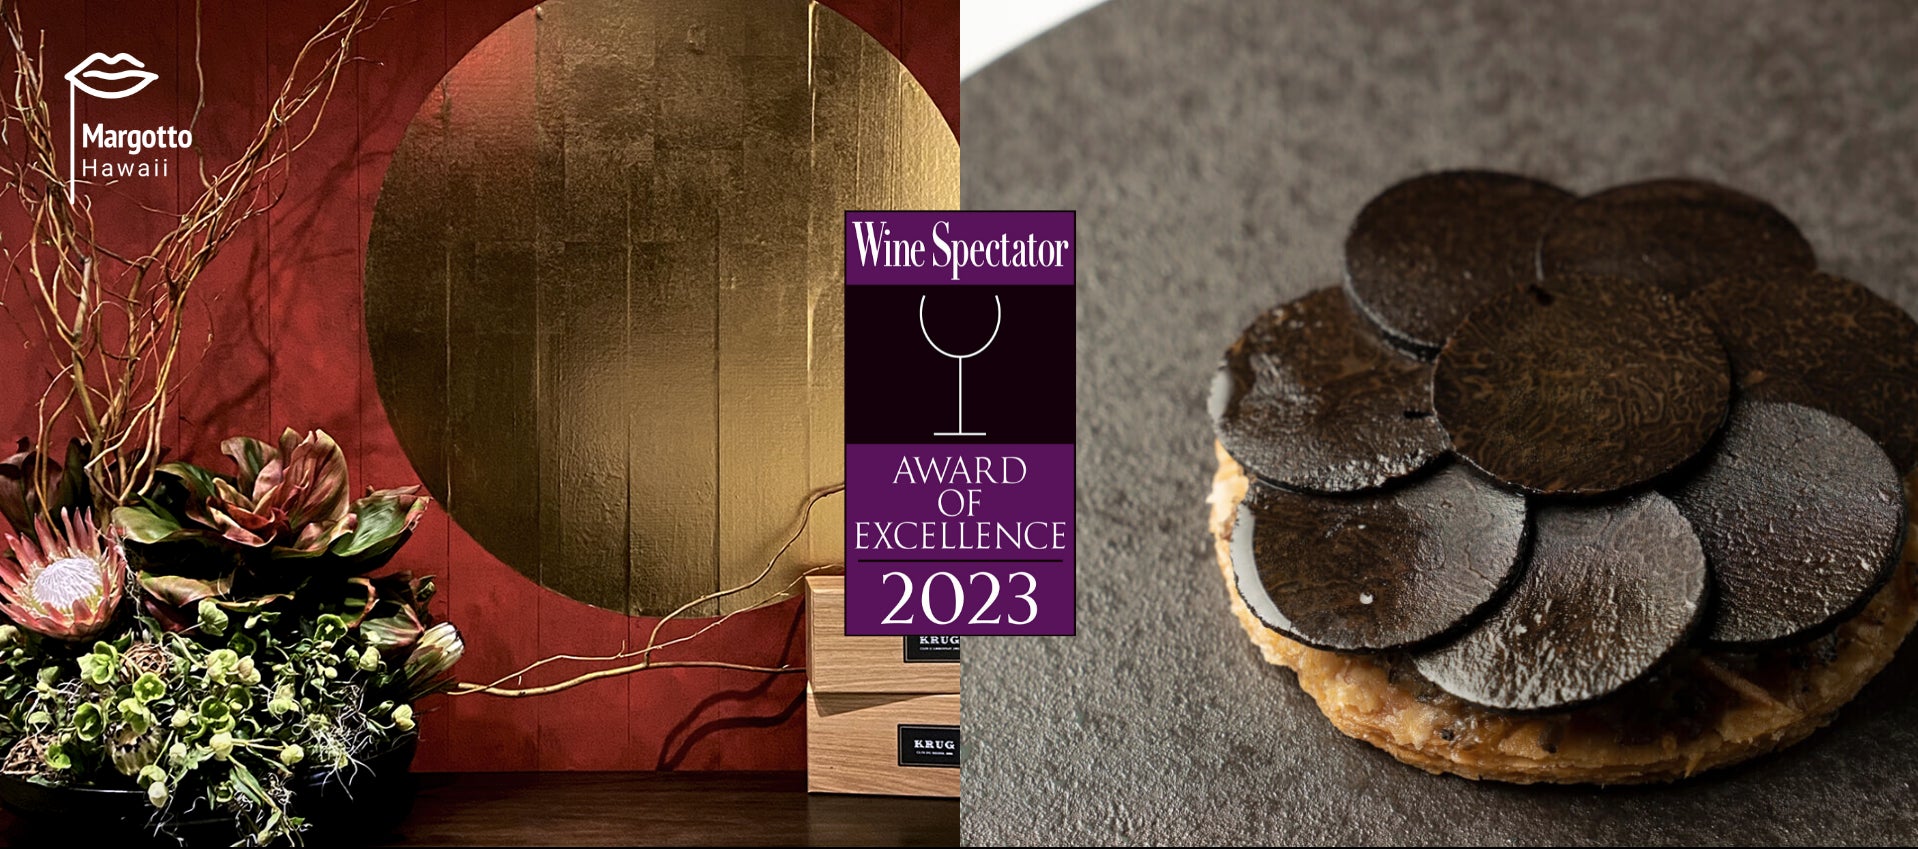 Margotto e Baciare と Margotto Hawaii 両店が WINE SPECTATOR誌が選ぶ2023年度の『AWARD OF EXCELLENCE』を受賞のサブ画像4